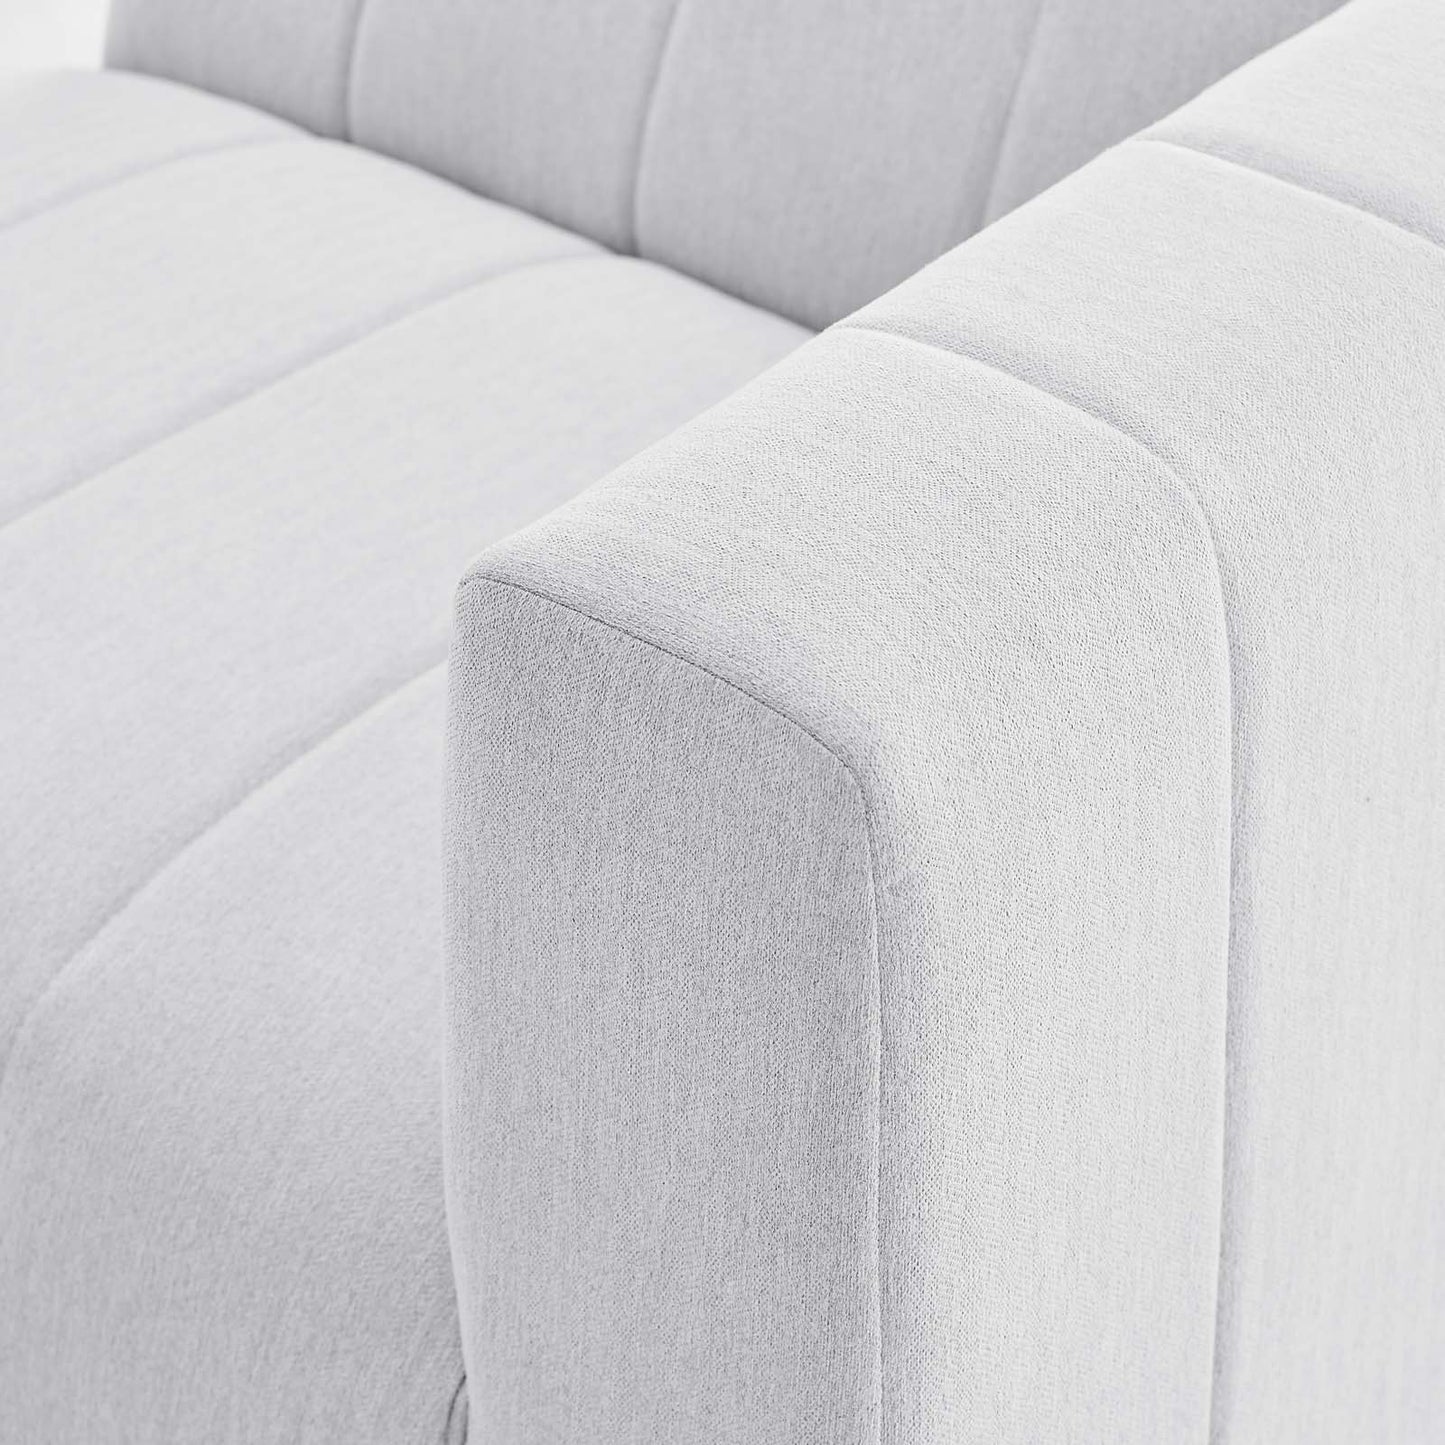 Bartlett Upholstered Fabric 3-Piece Sofa Ivory EEI-4514-IVO